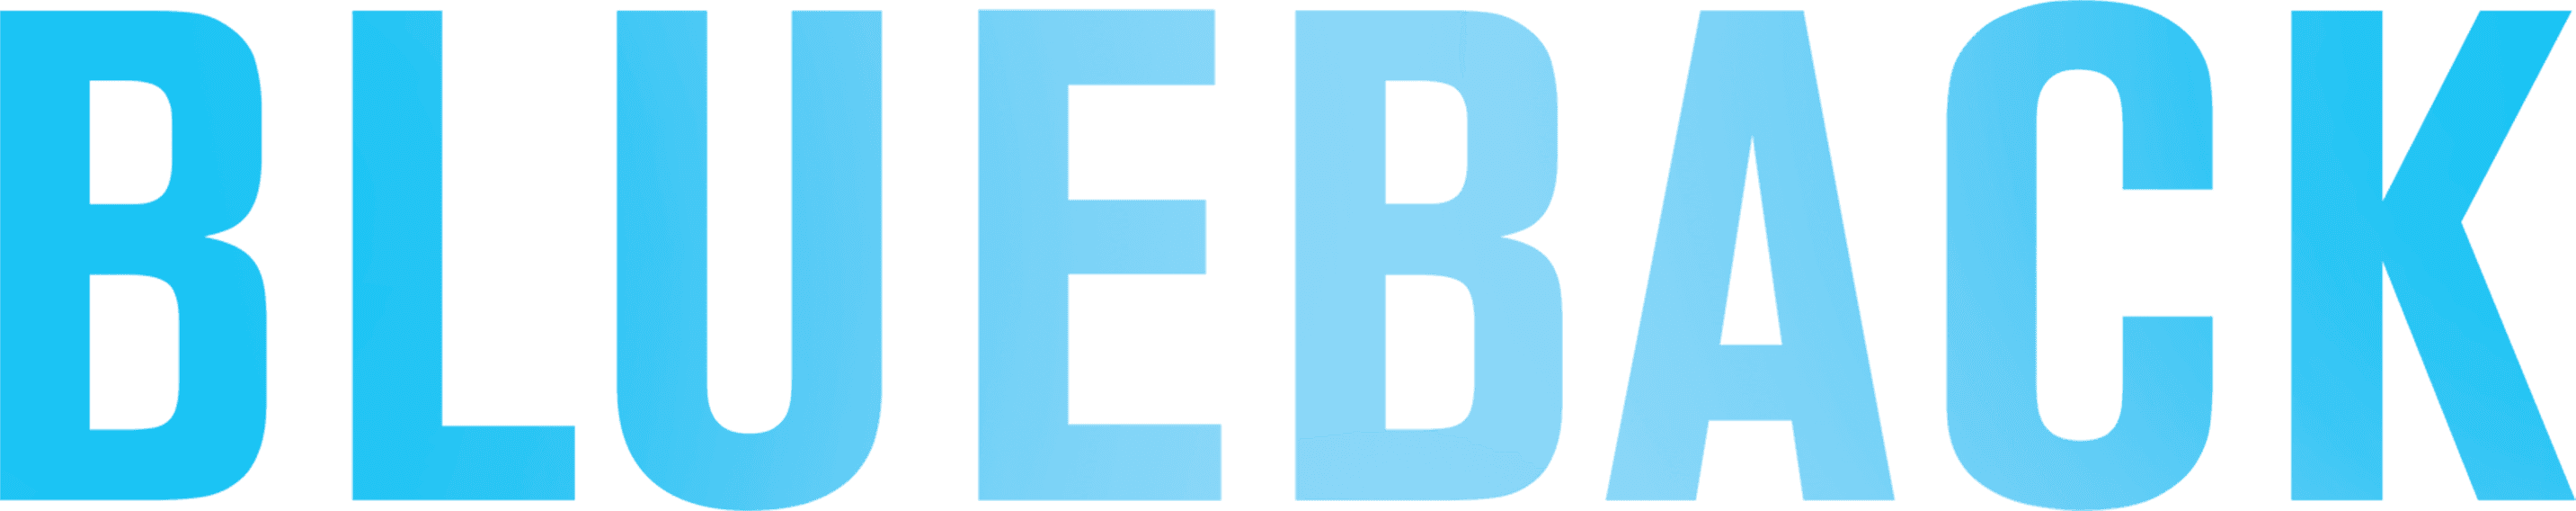 Blueback logo